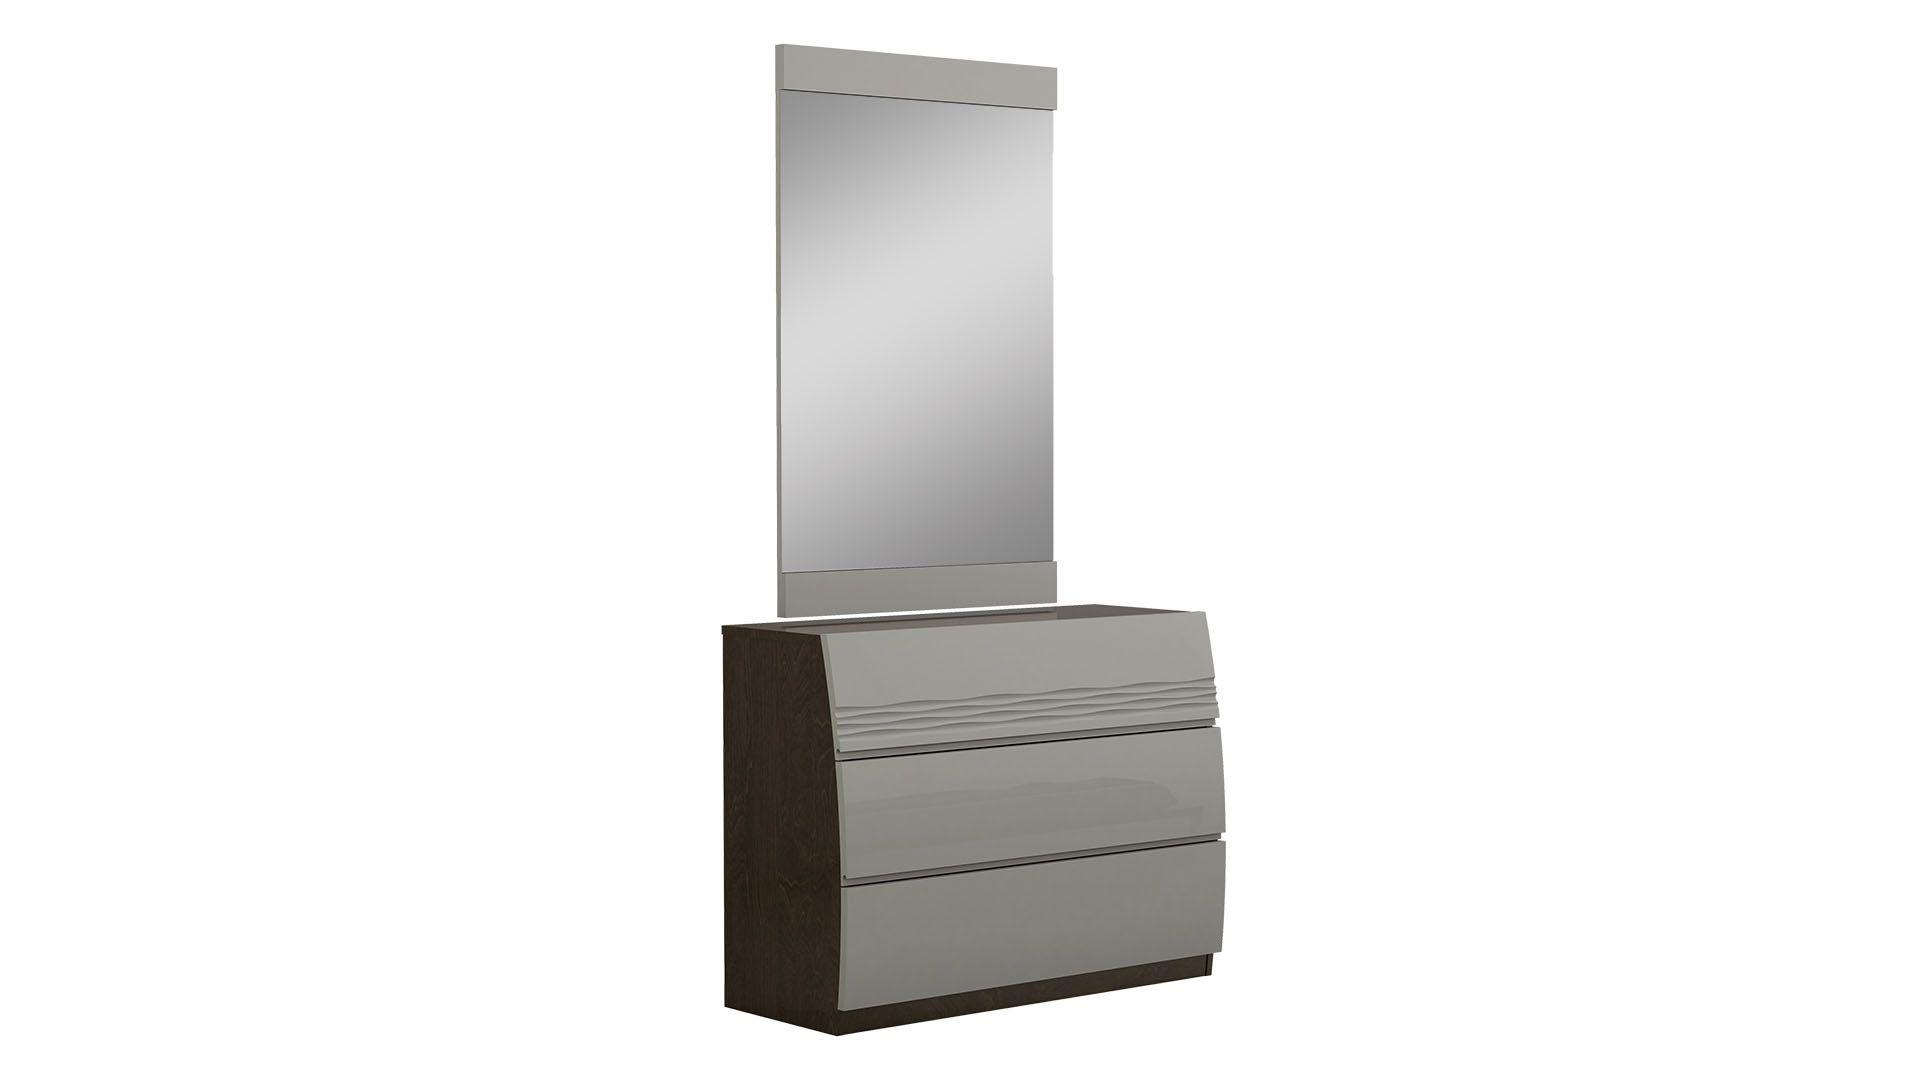 

                    
American Eagle Furniture P102-BED-Q Platform Bedroom Set Light Gray/Brown  Purchase 
